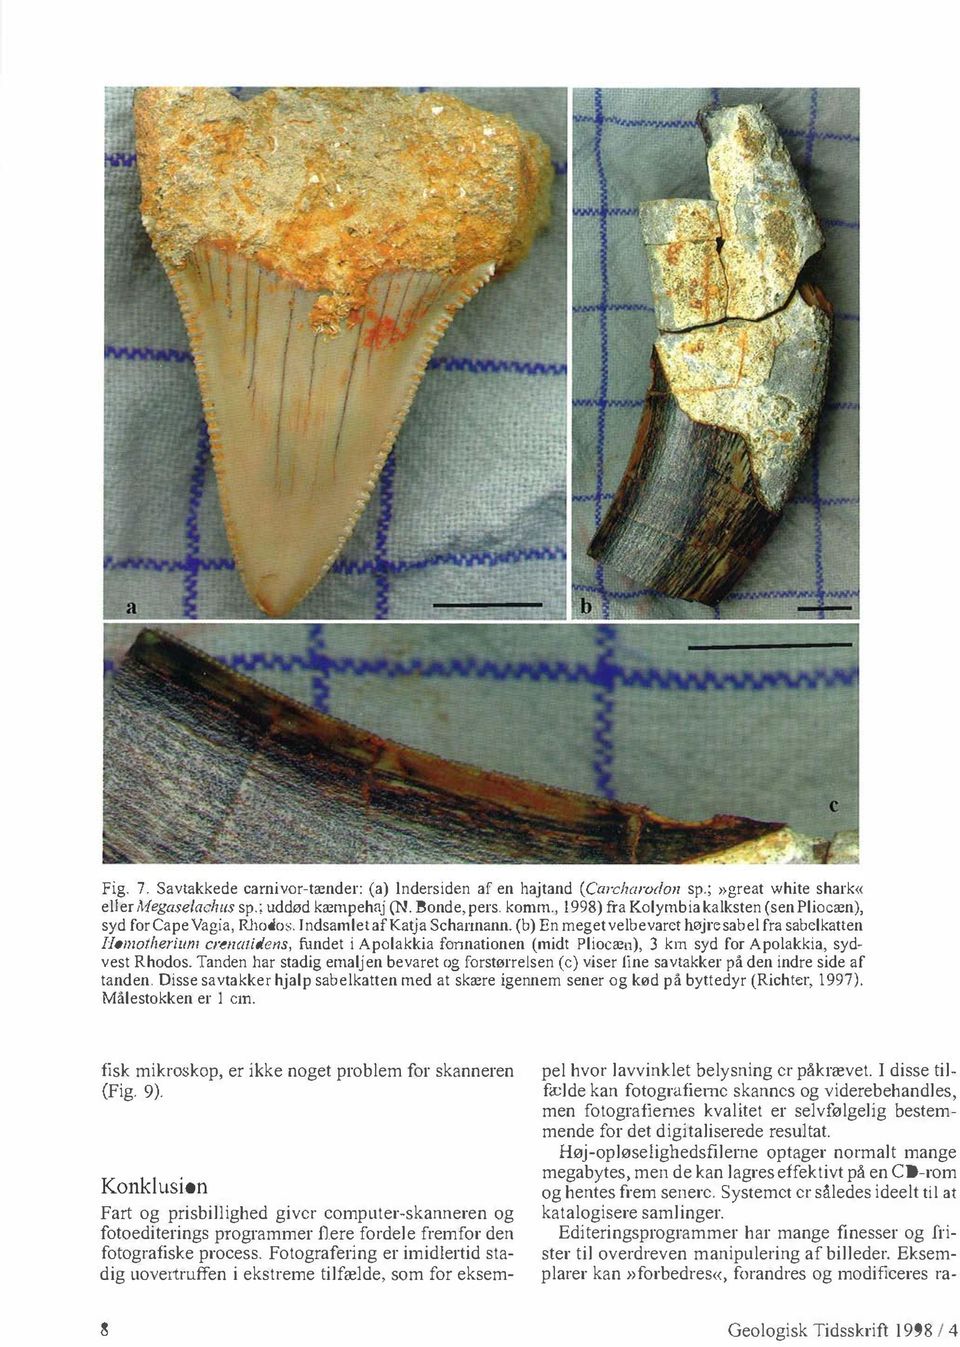 (b) En meget velbevarct højrc sabel fra sabclkatten HomO/herilll1l crelloth/cl1s, fundet i Apolakkia fonnationen (midt Plioeæn), 3 km syd for Apolakkia, sydvest Rhodos.